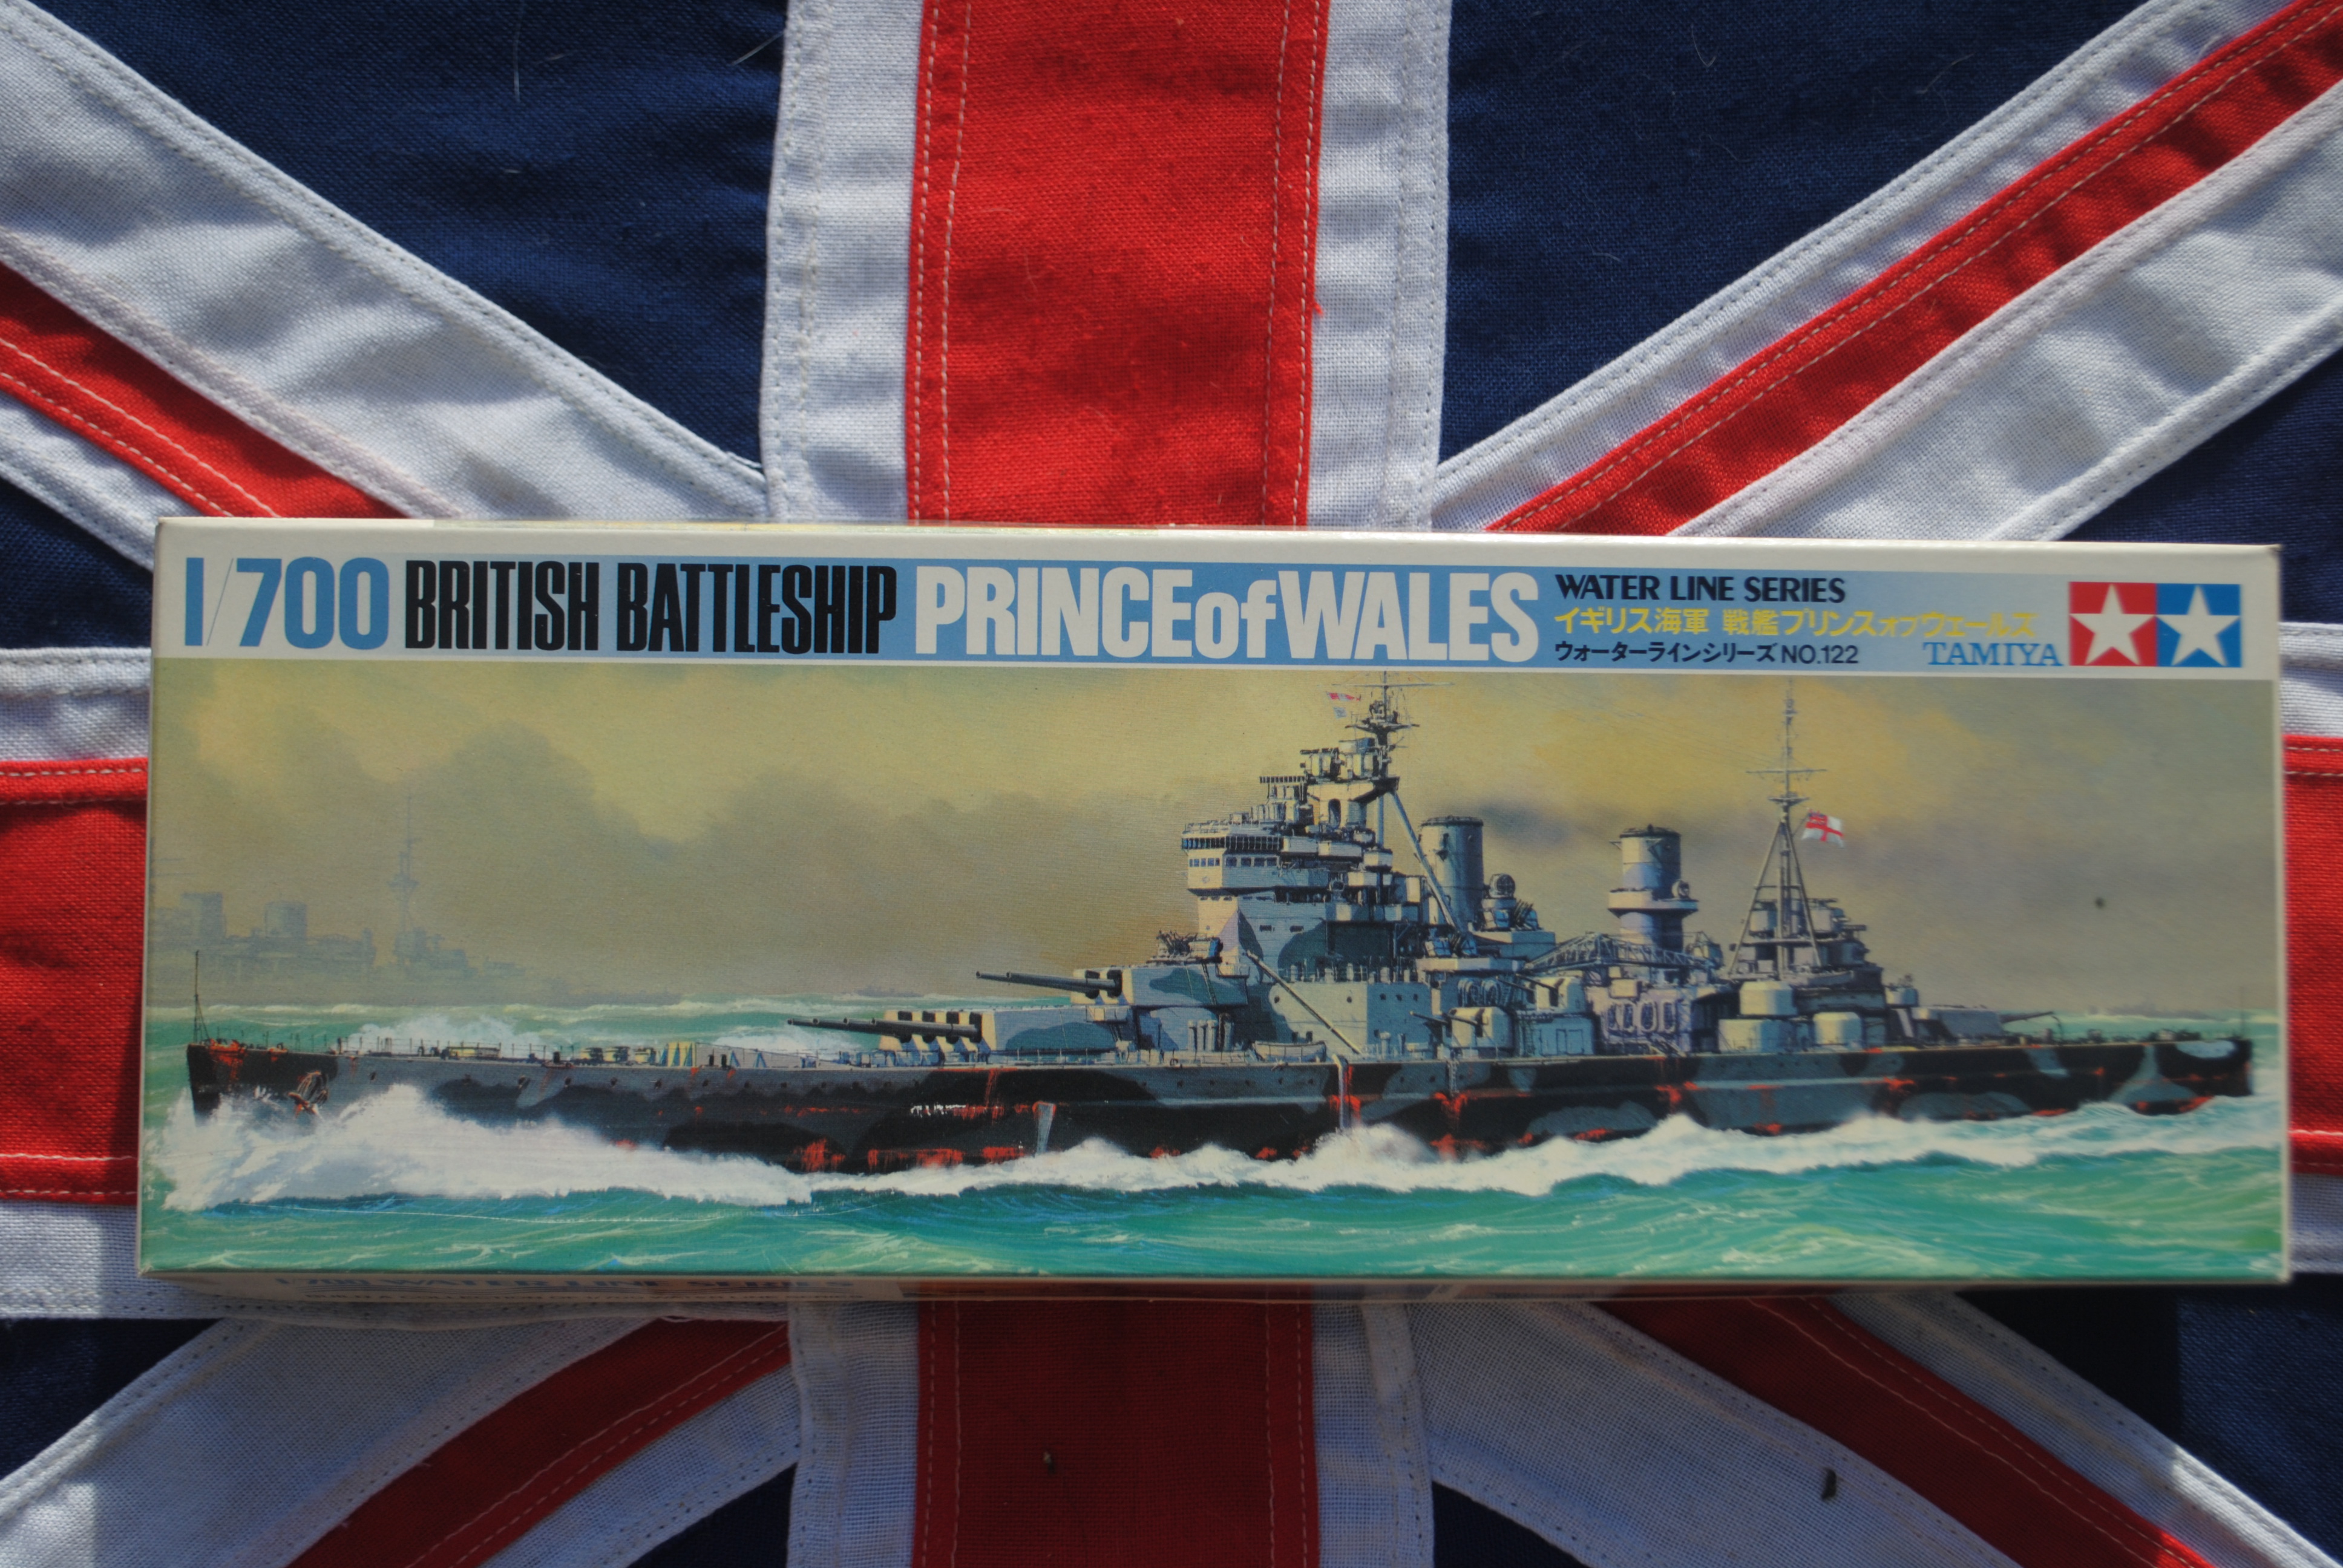 Tamiya WL.B122 British Battleship Prince of Wales Water Line Series